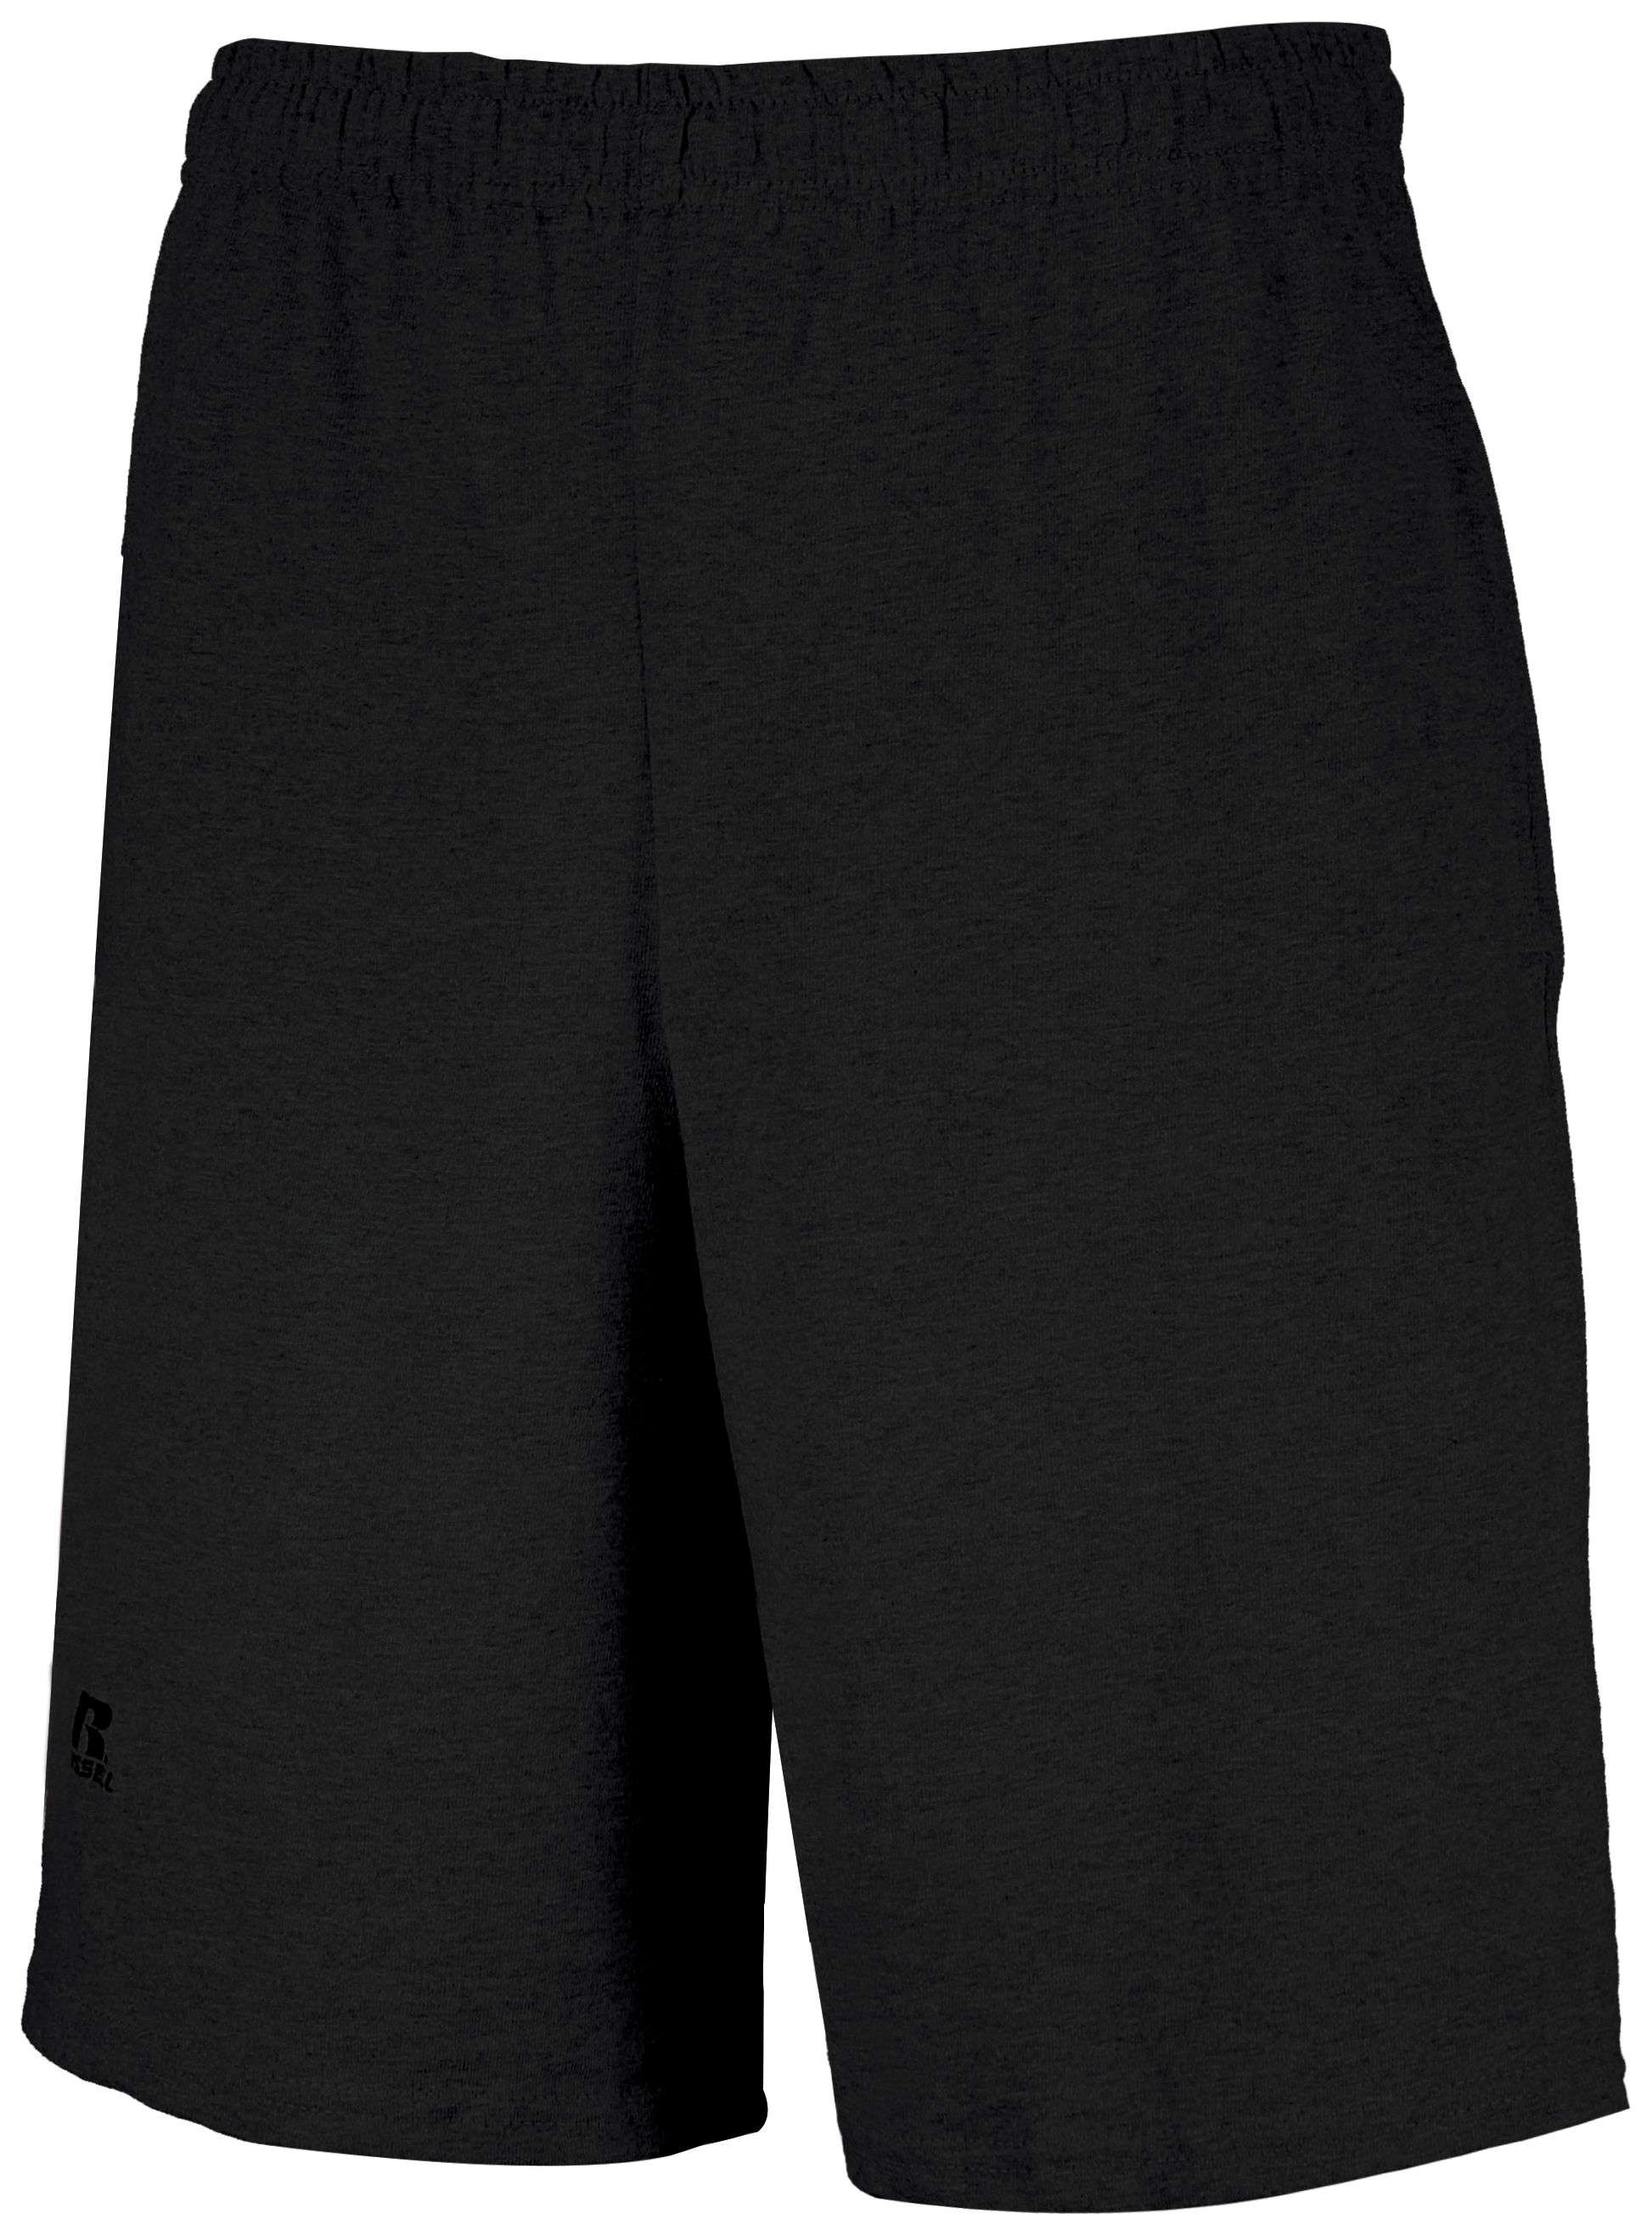 Russell Basic Cotton Pocket Shorts - 25843M